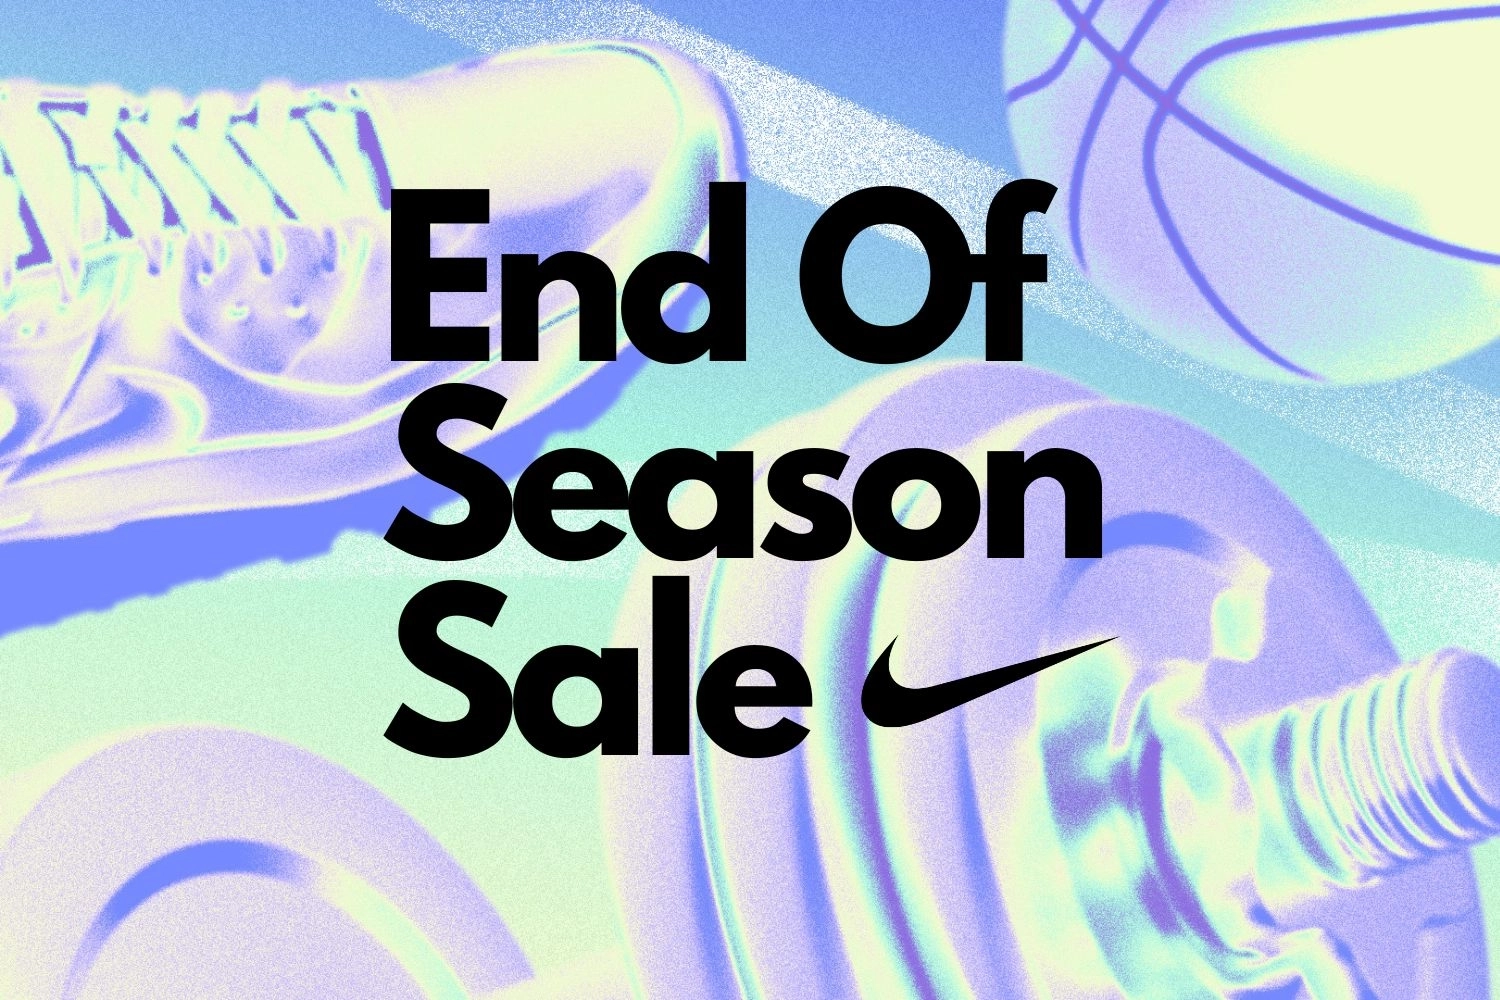 De Nike End of Season Sale met kortingen tot wel 50% is verlengd